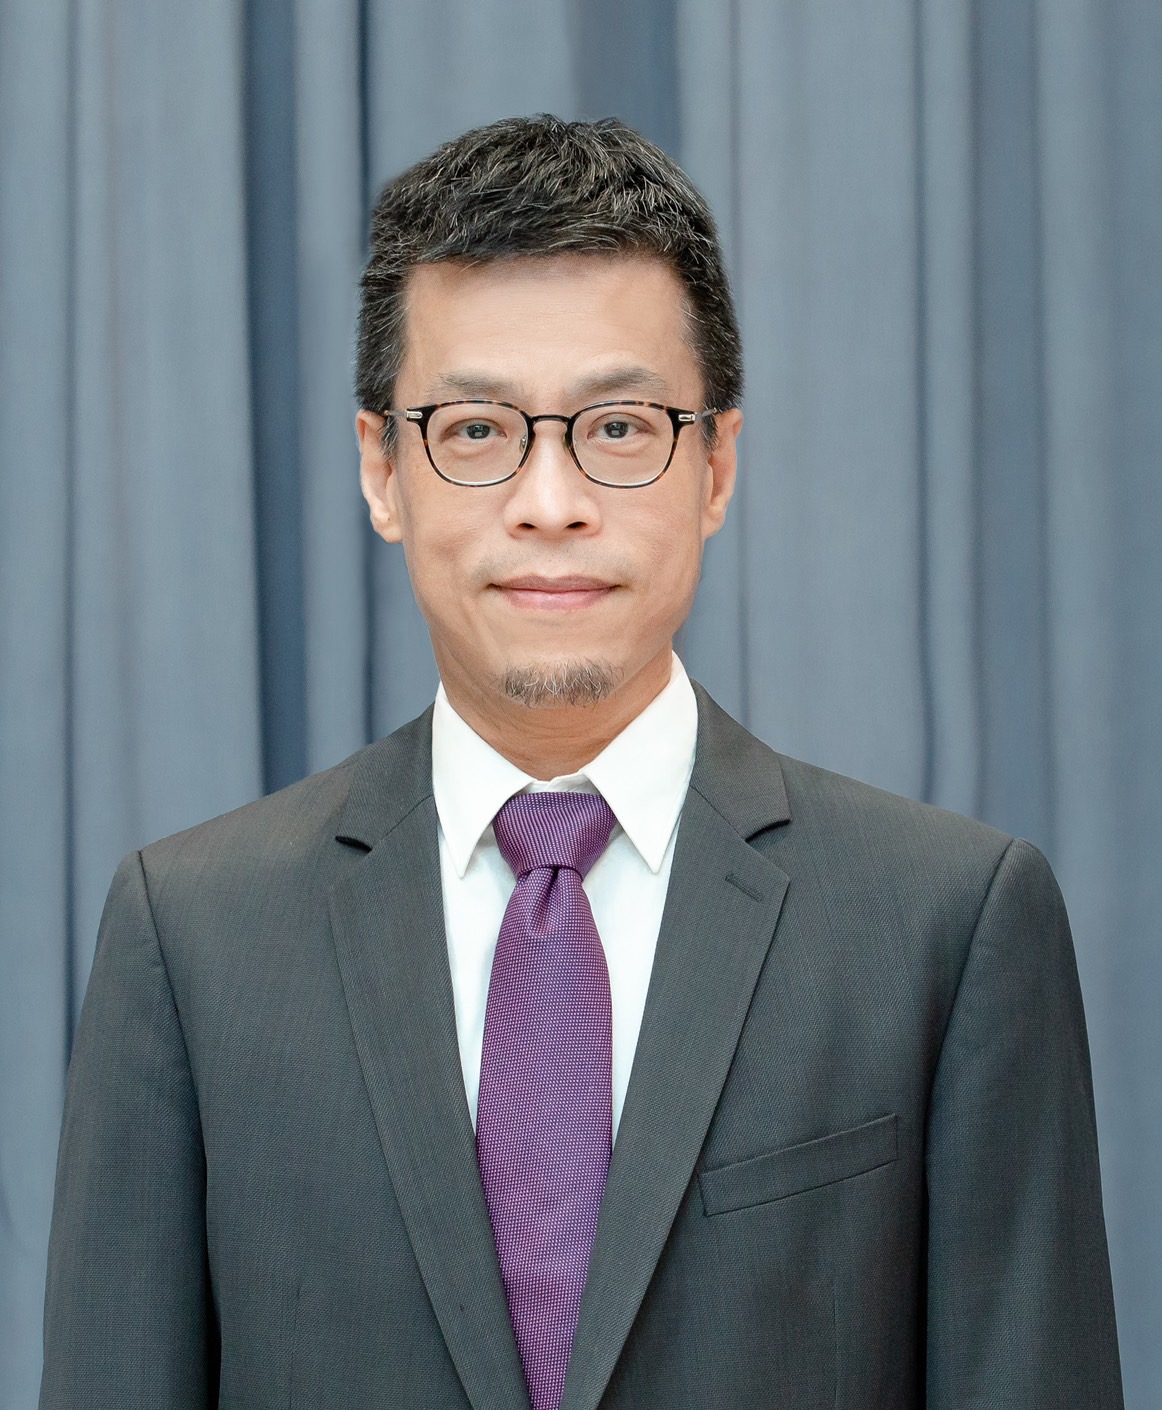 Mr. Alex Huang, Deputy Secretary-General to the President